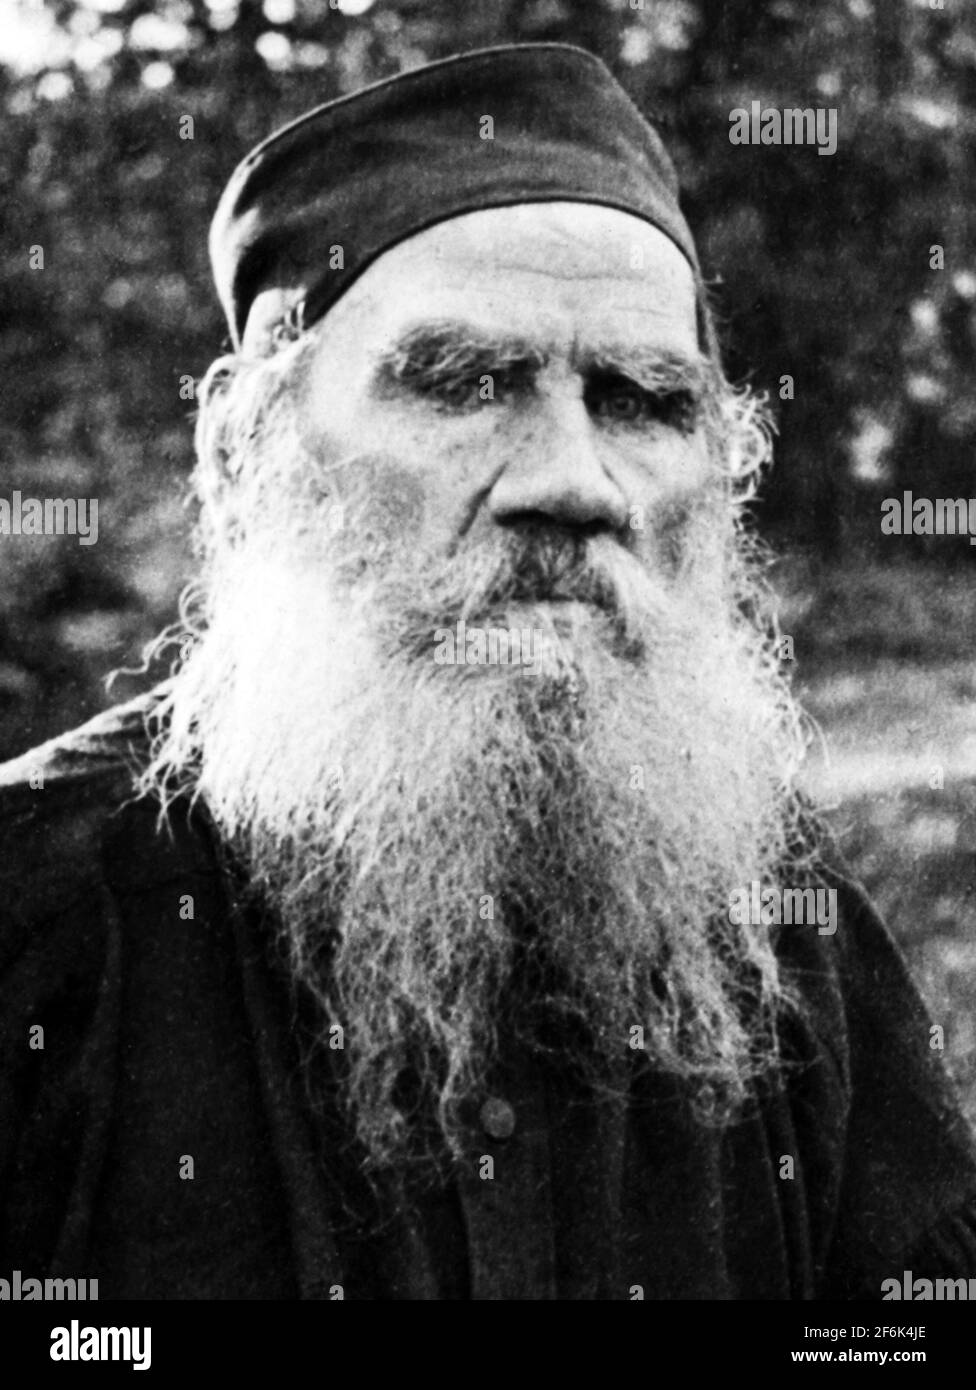 Vintage portrait photo of Russian writer Leo Tolstoy (1828 – 1910) – author of War and Peace + Anna Karenina. Photo circa 1897. Stock Photo